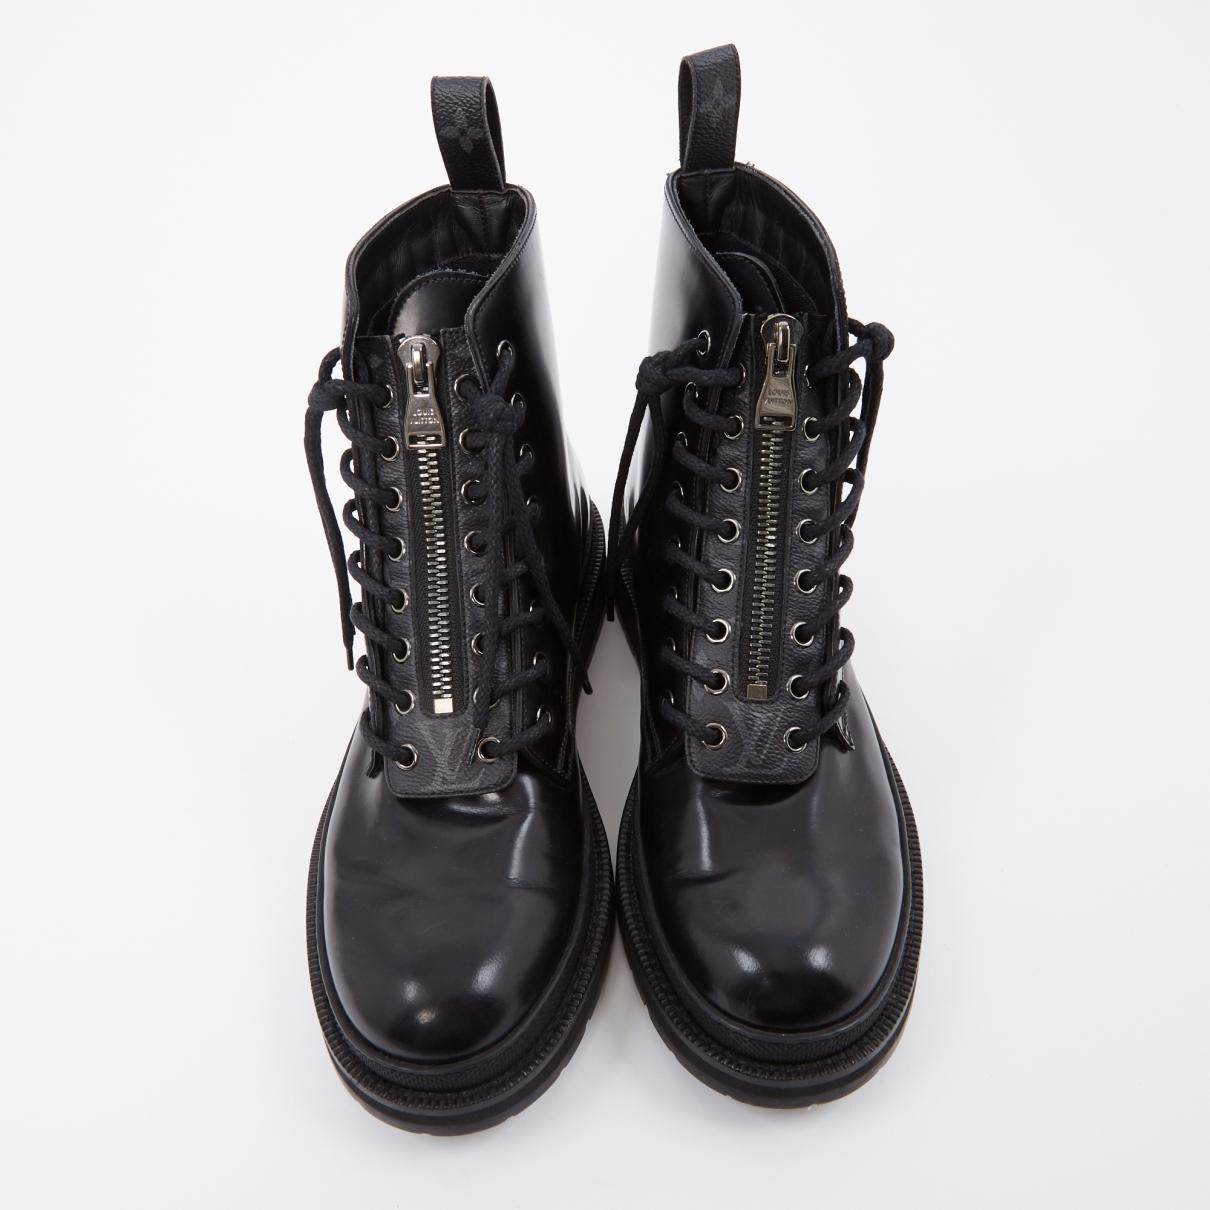 louis vuitton black ice boots